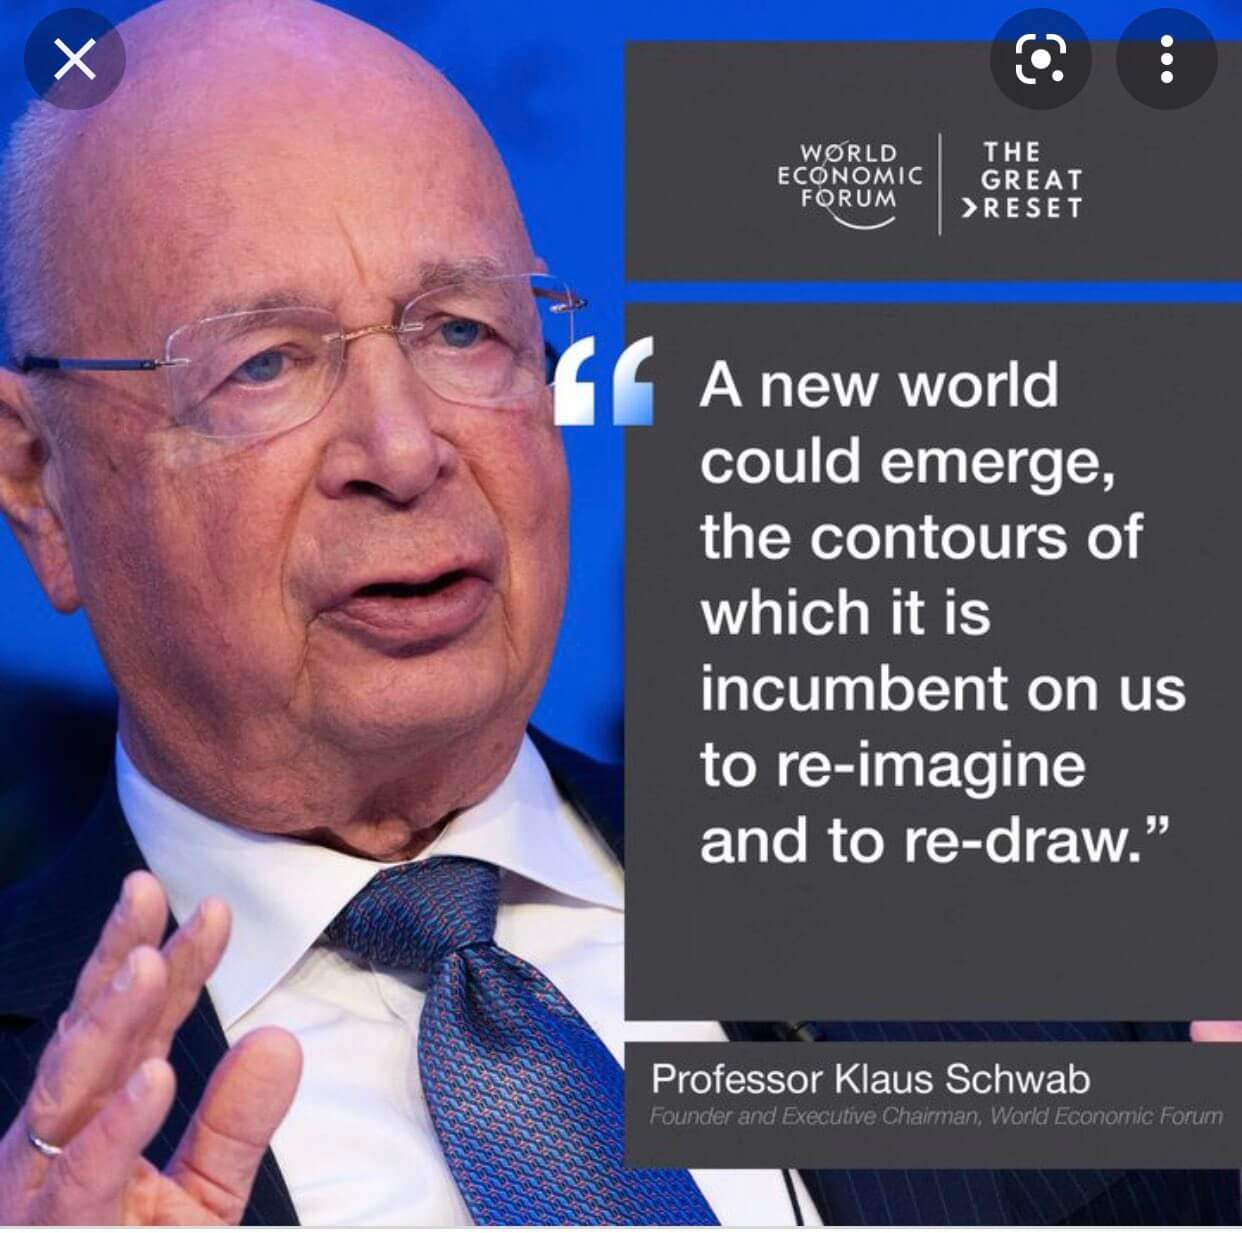 World Economic Forum: Professor Klaus Schwab